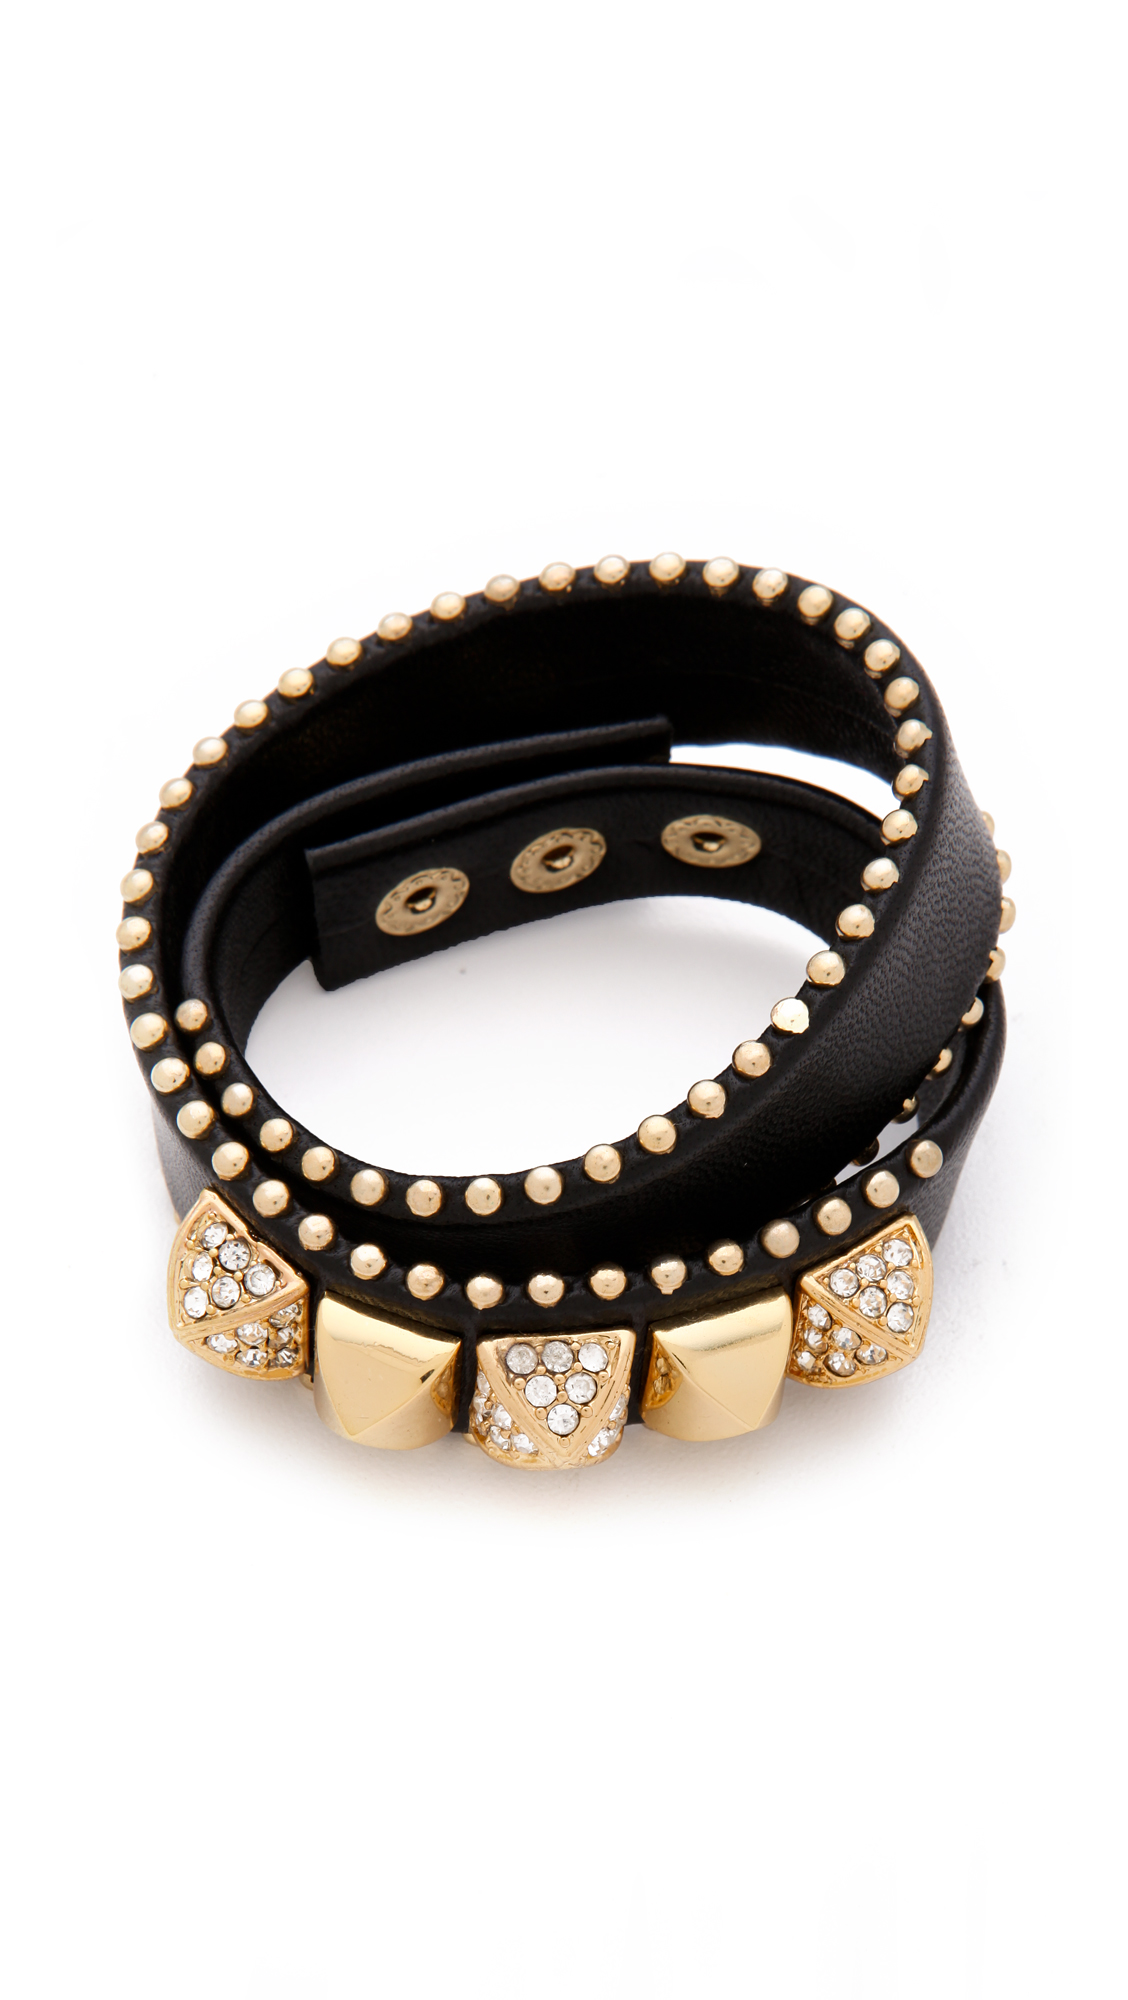 Lyst - Juicy couture Heavy Metal Skinny Leather Wrap Bracelet in Metallic